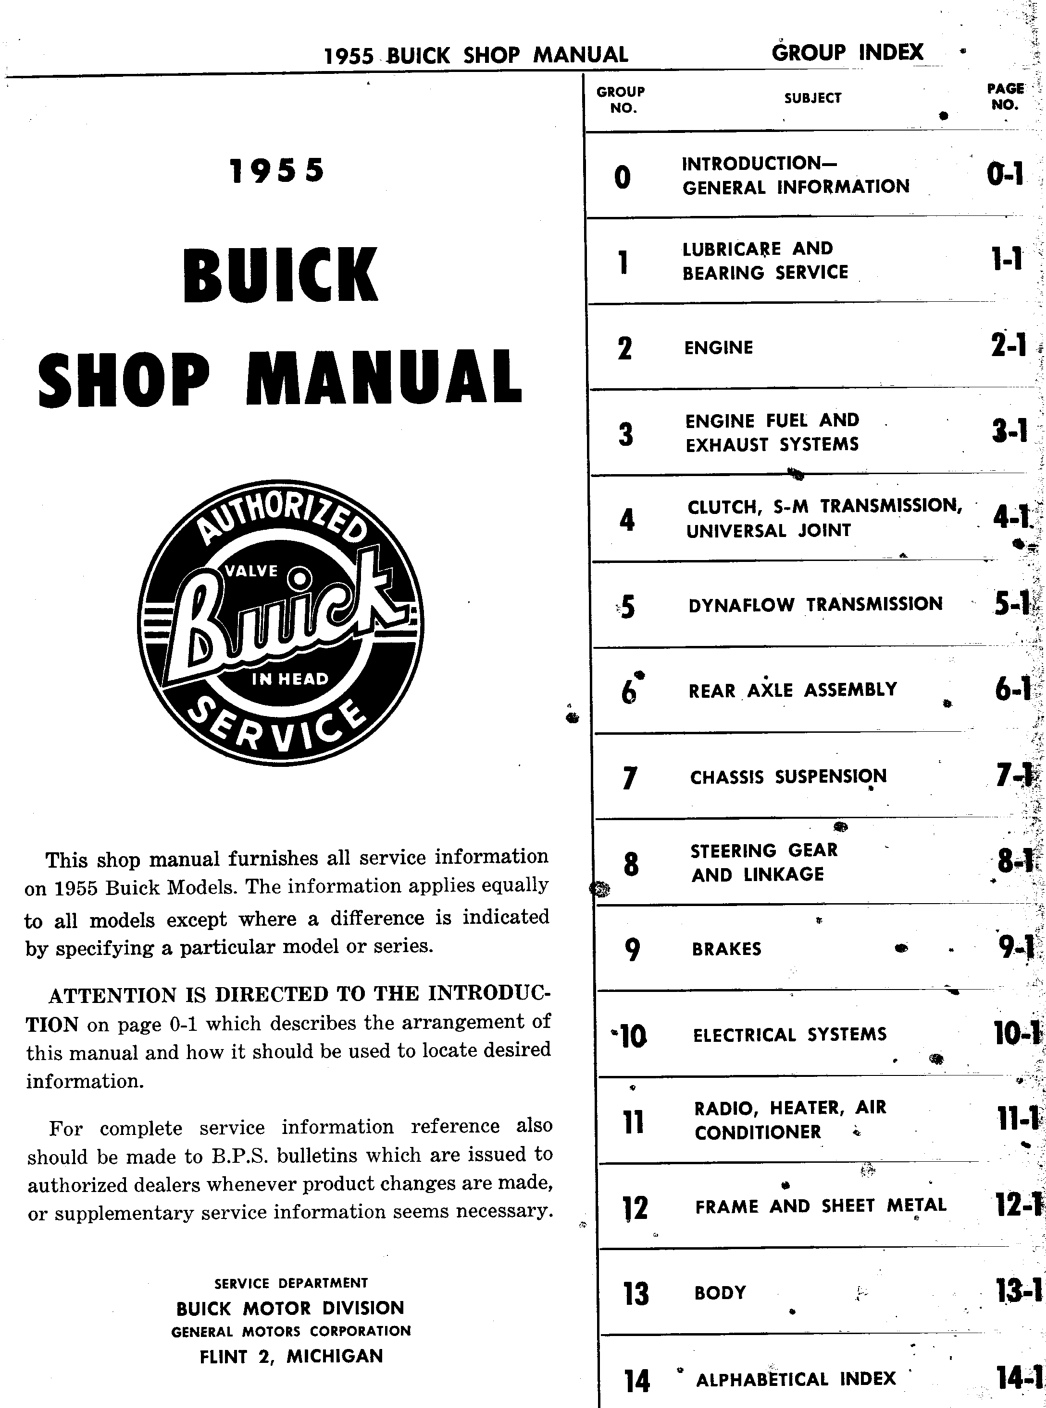 n_01 1955 Buick Shop Manual - Gen Information-002-002.jpg